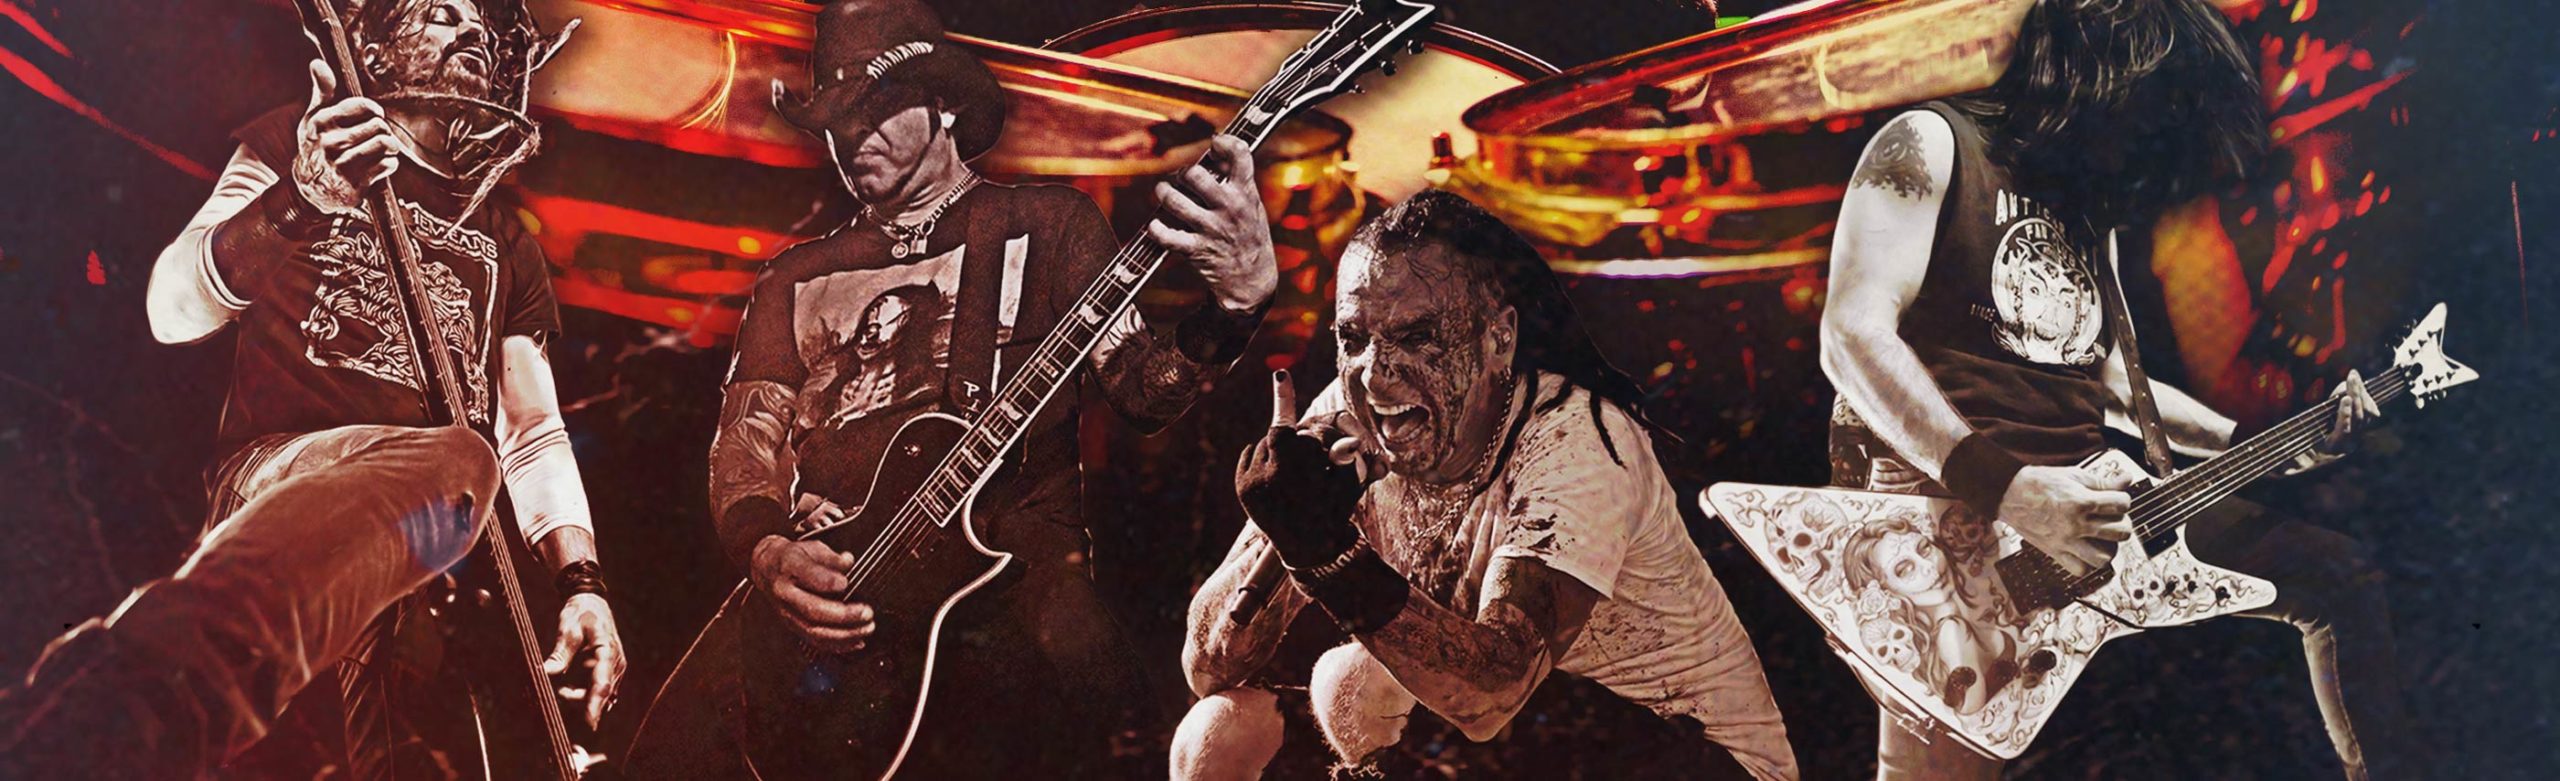 Heavy Metal Supergroup Hellyeah Will Headline Missoula Concert Image